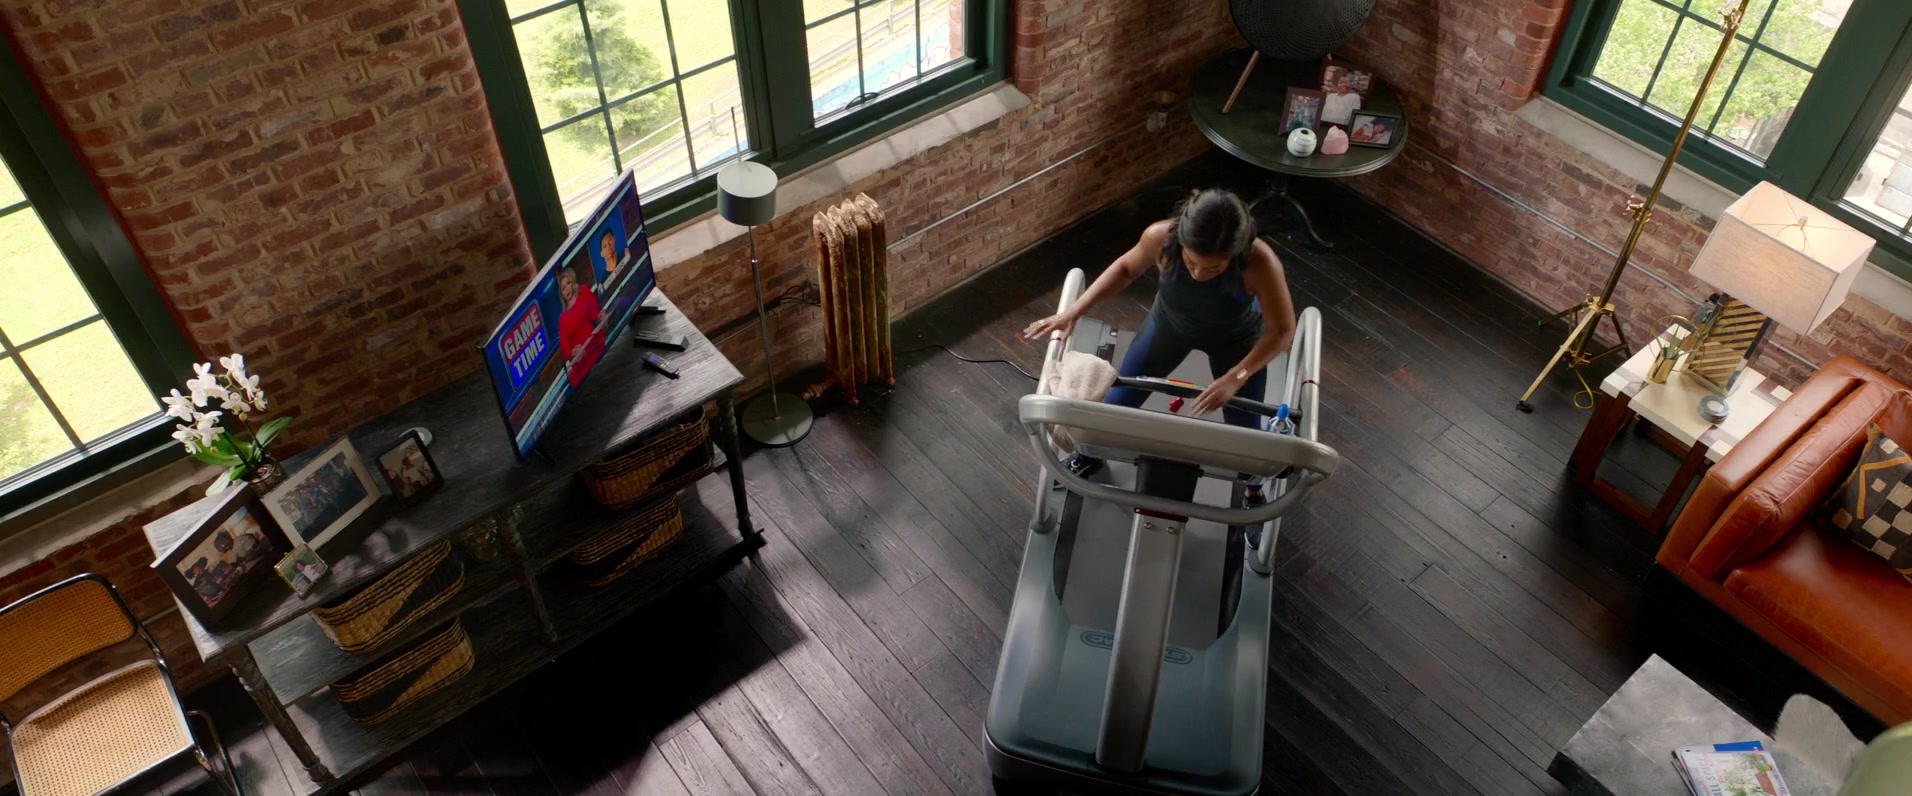 Star Trac Treadmill Used by Taraji P. Henson in What Men Want (2019) Movie